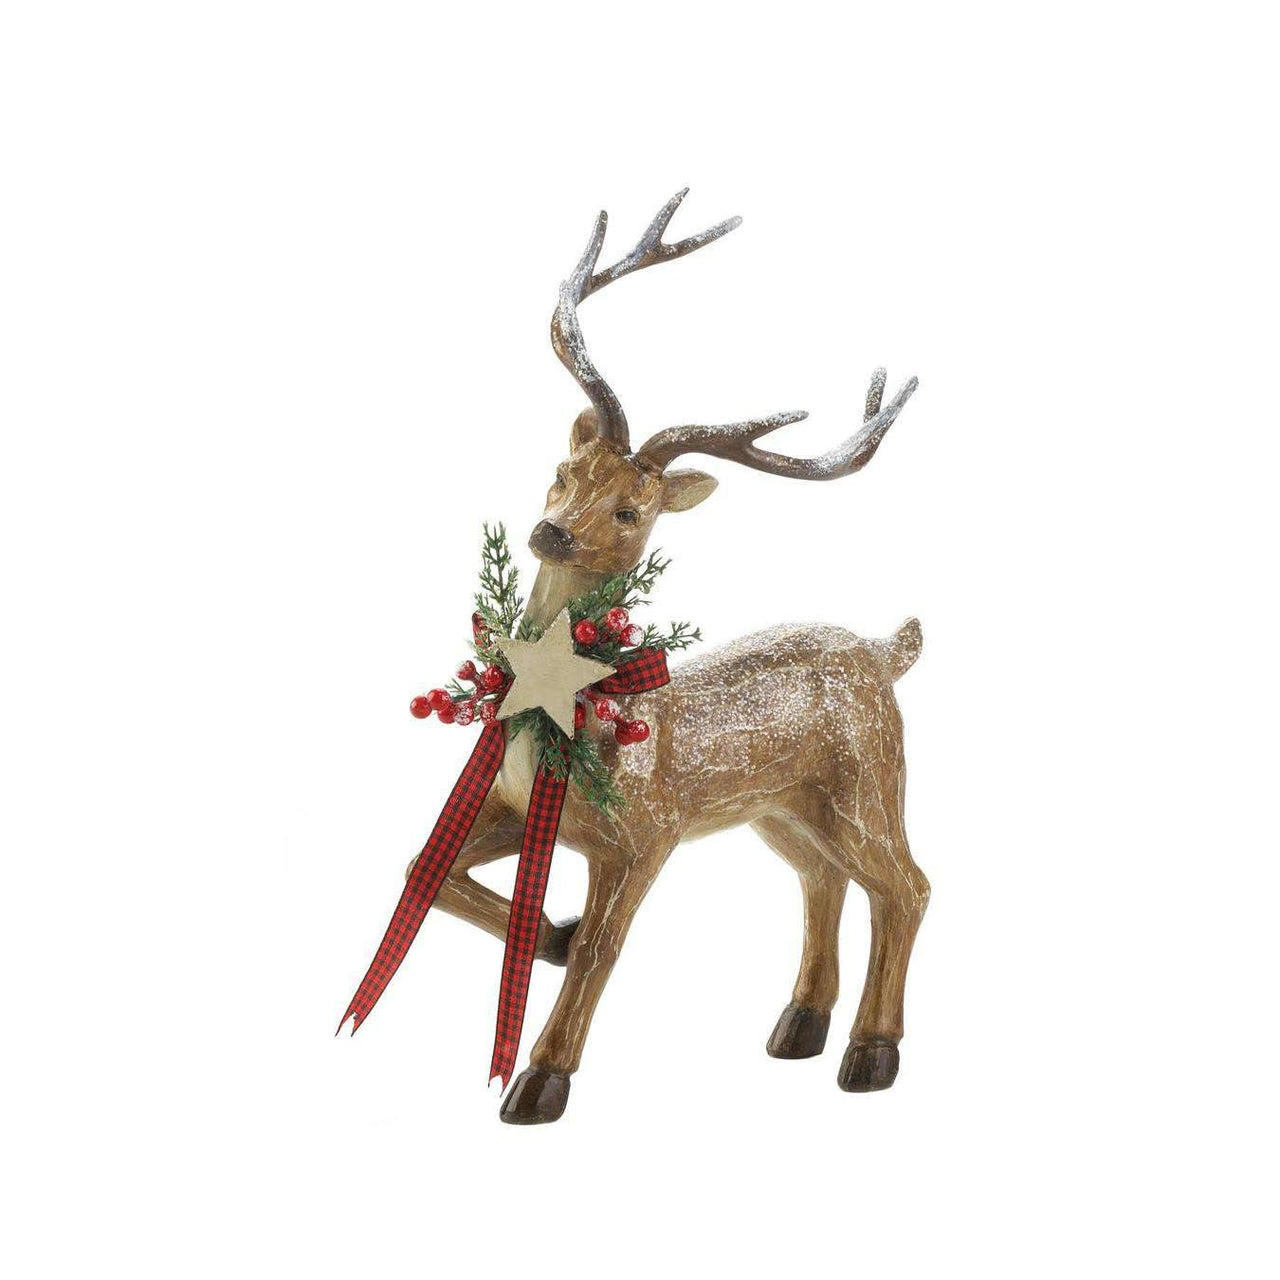 Rustic Holiday Reindeer Figurine